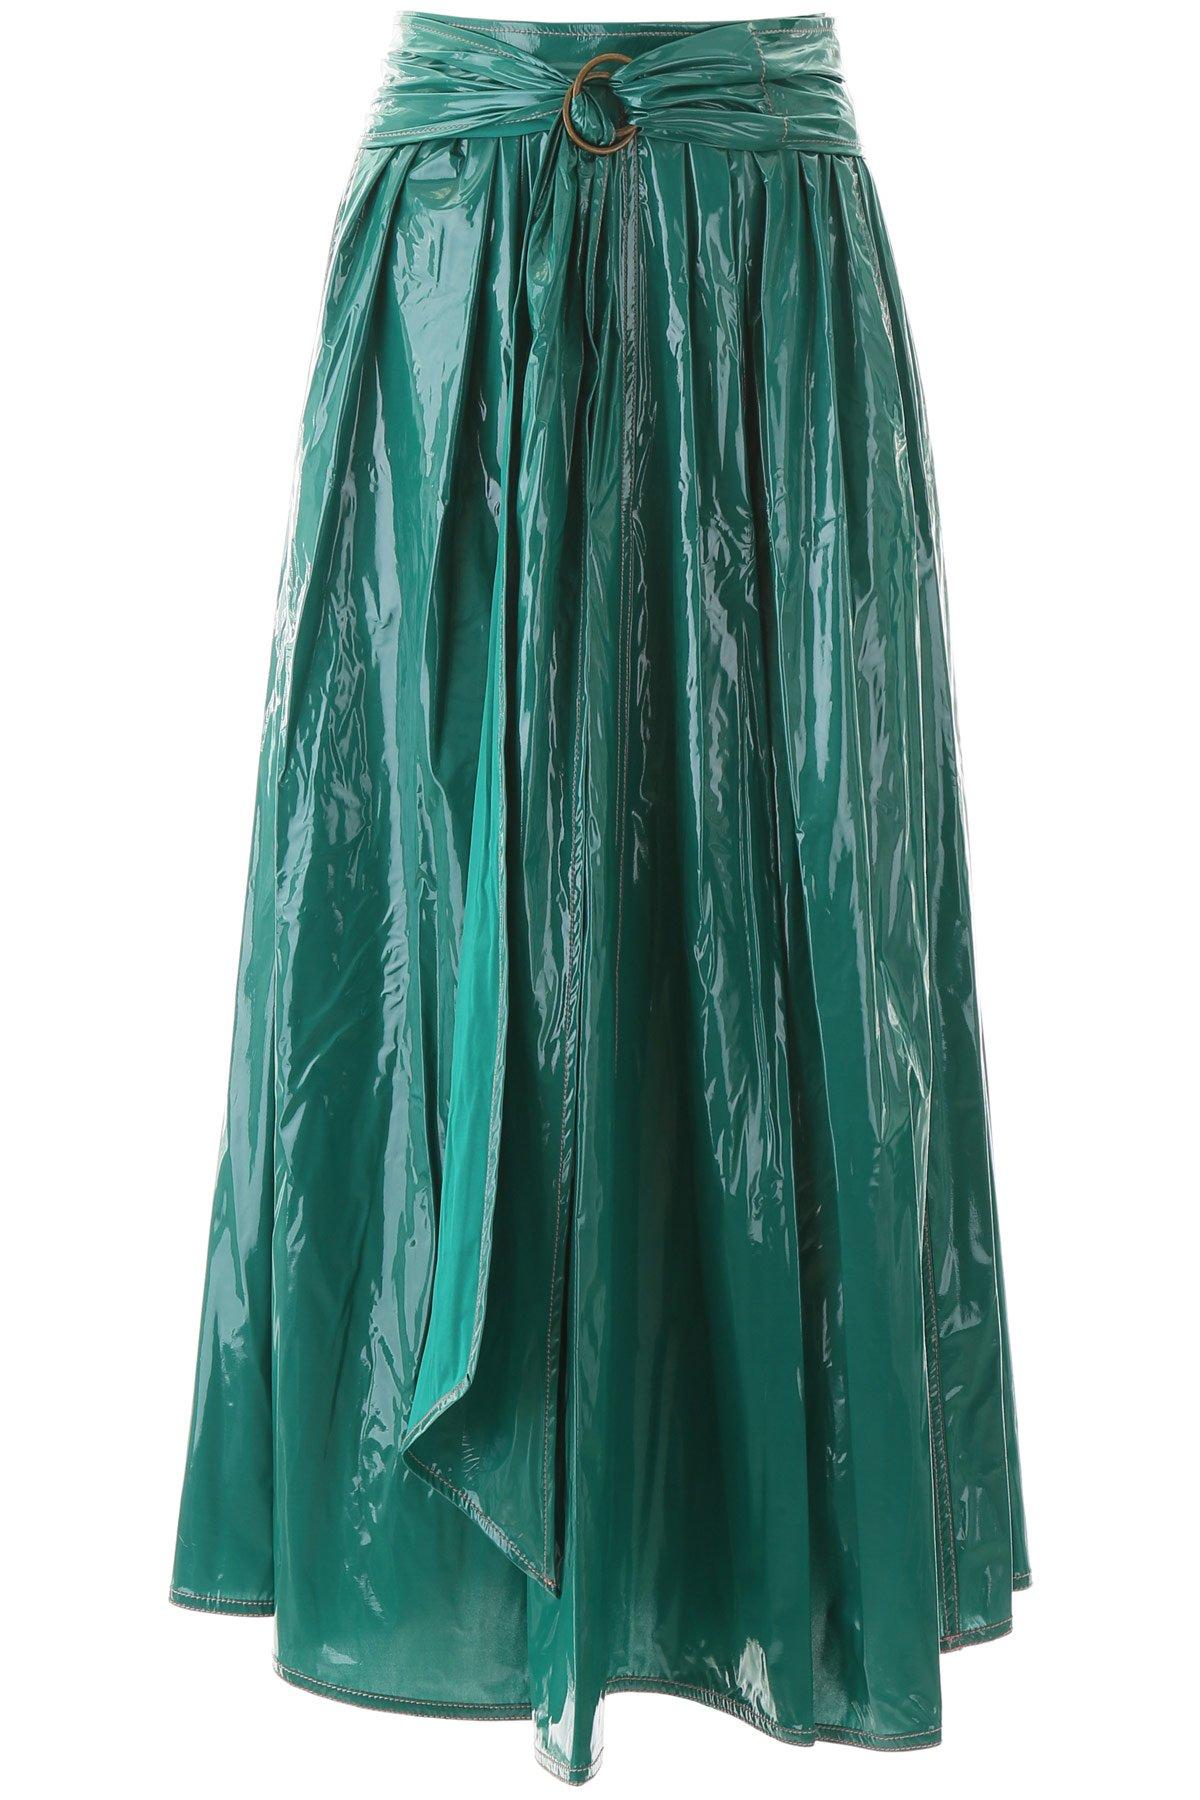 Sies Marjan Silk Glossy Skirt in Green - Lyst